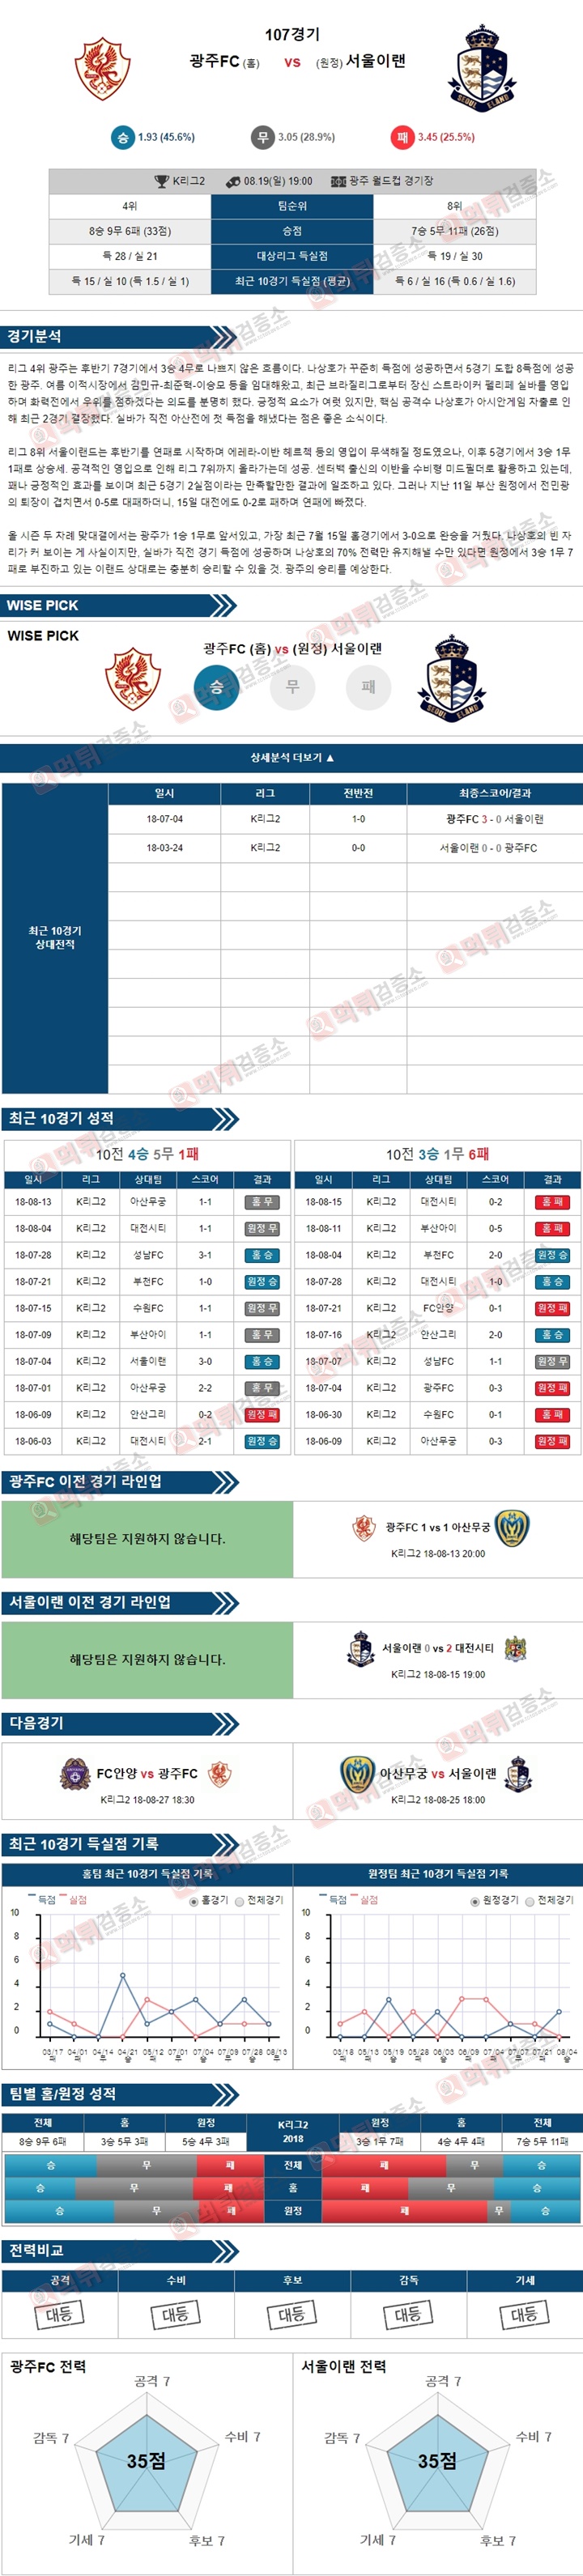 K리그2 8월19일 광주FC vs 서울이랜 먹튀 검증소 분석픽